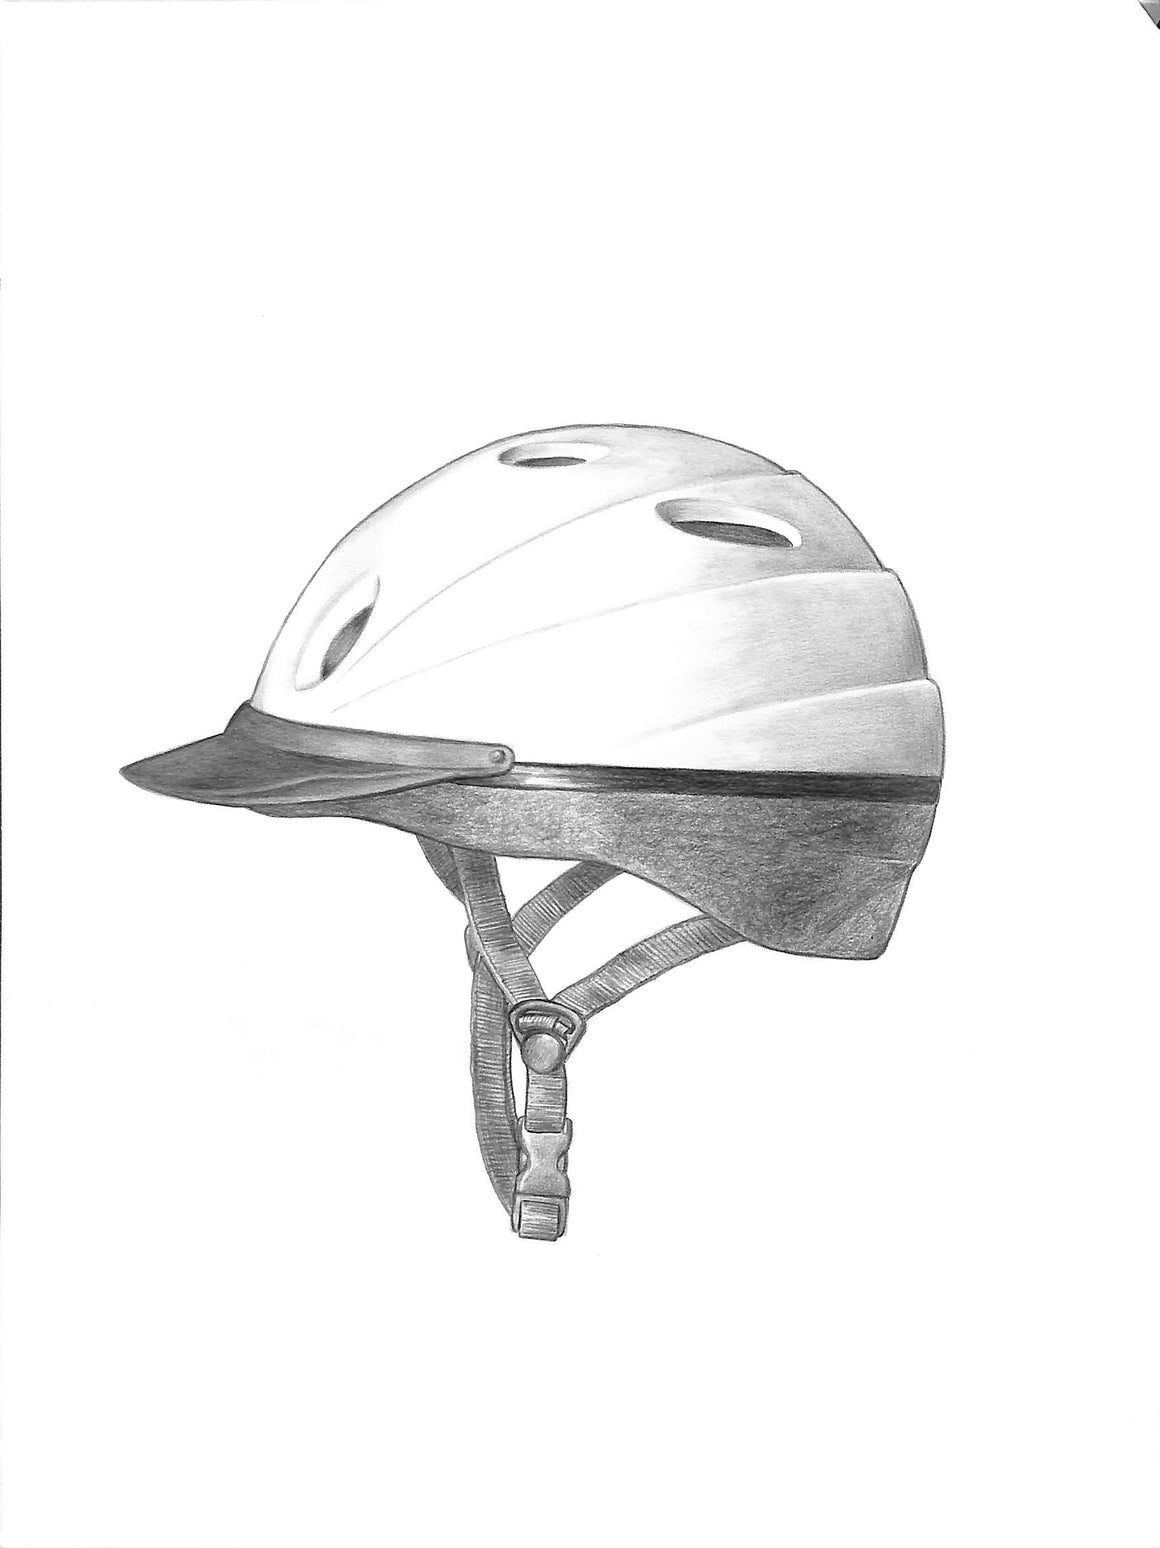 Del Mar Classico Helmet Graphite Drawing